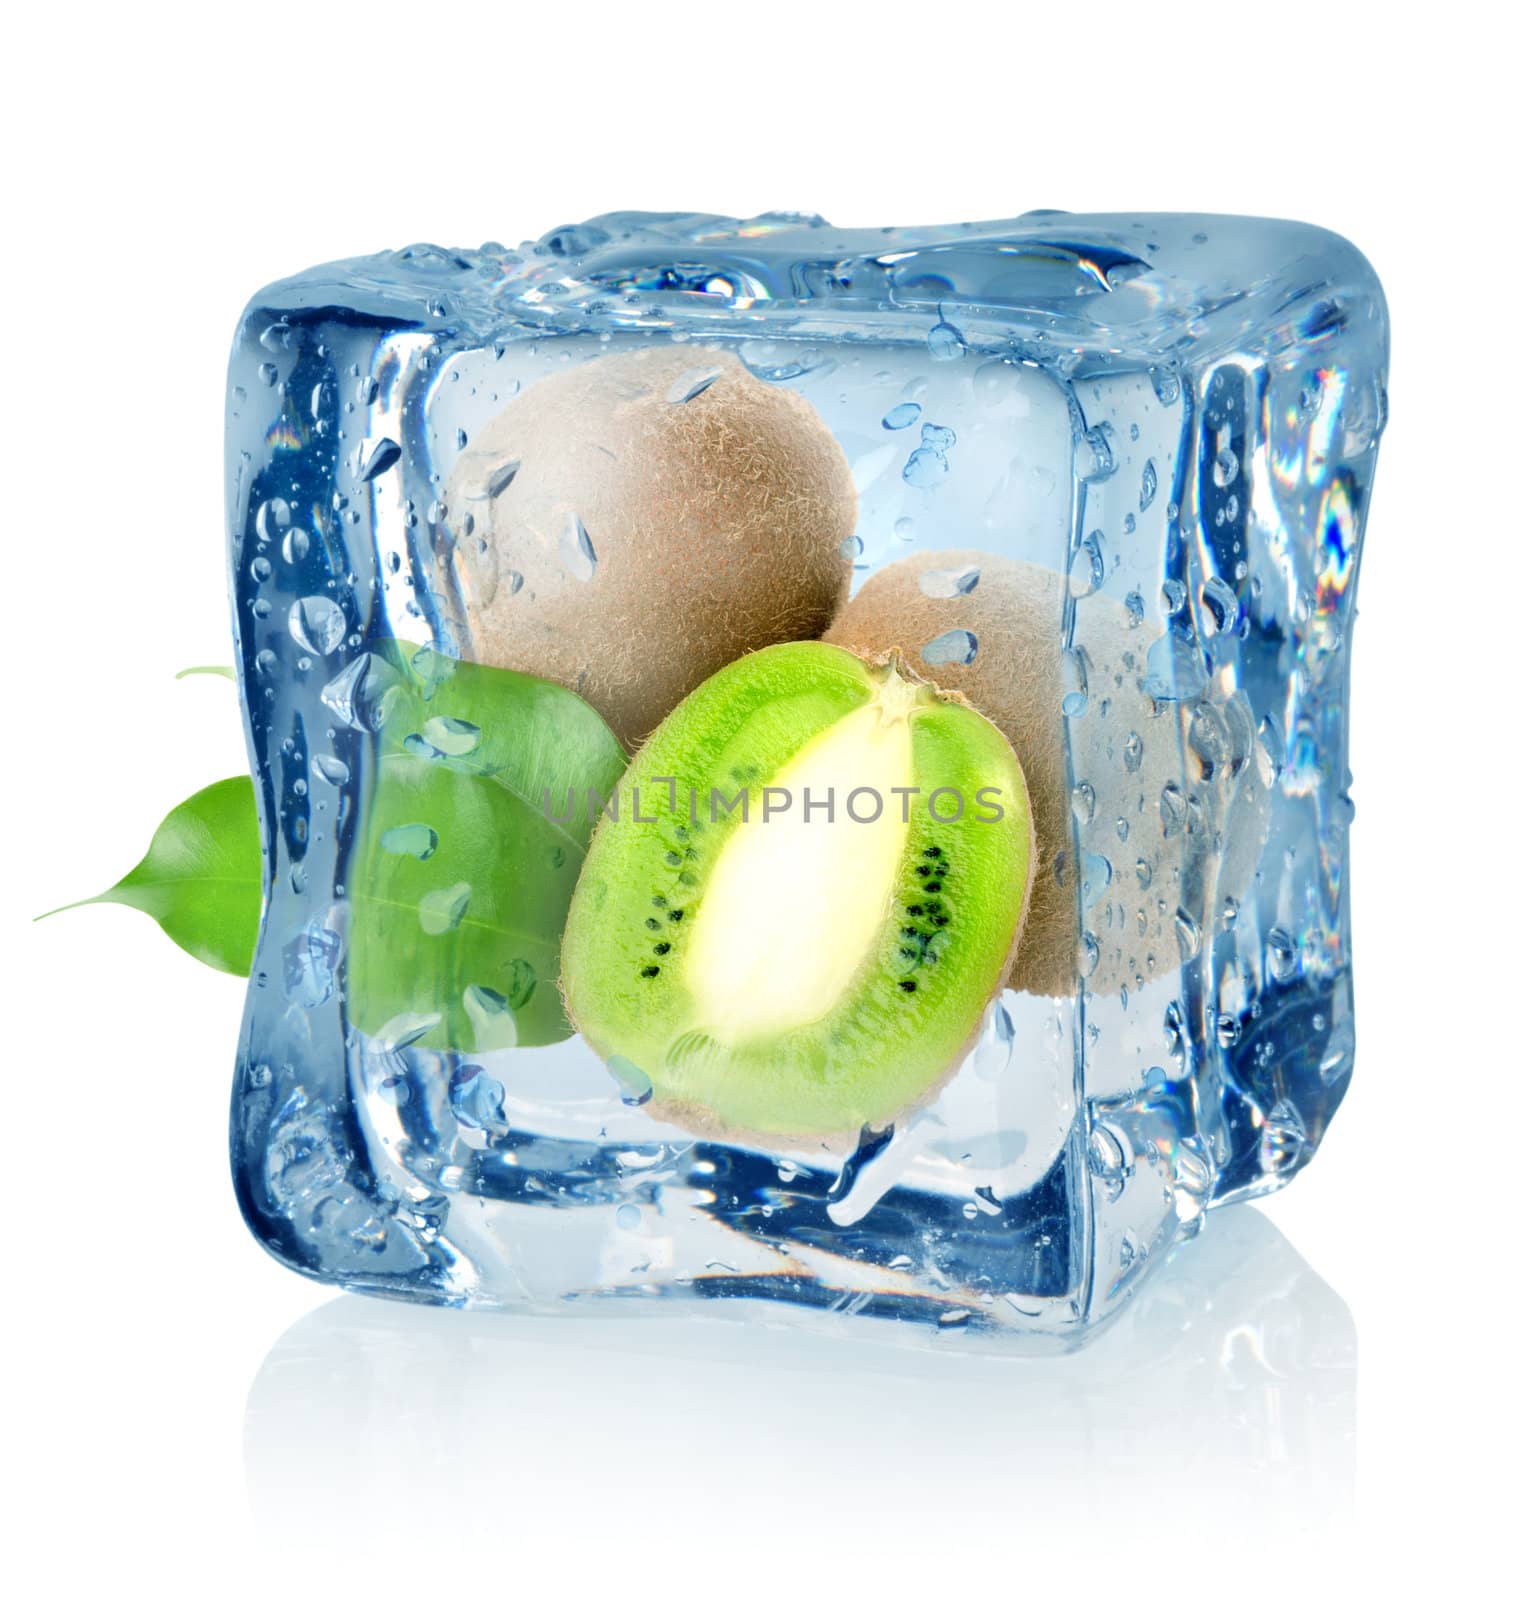 Ice cube and kiwi isolated on a white background